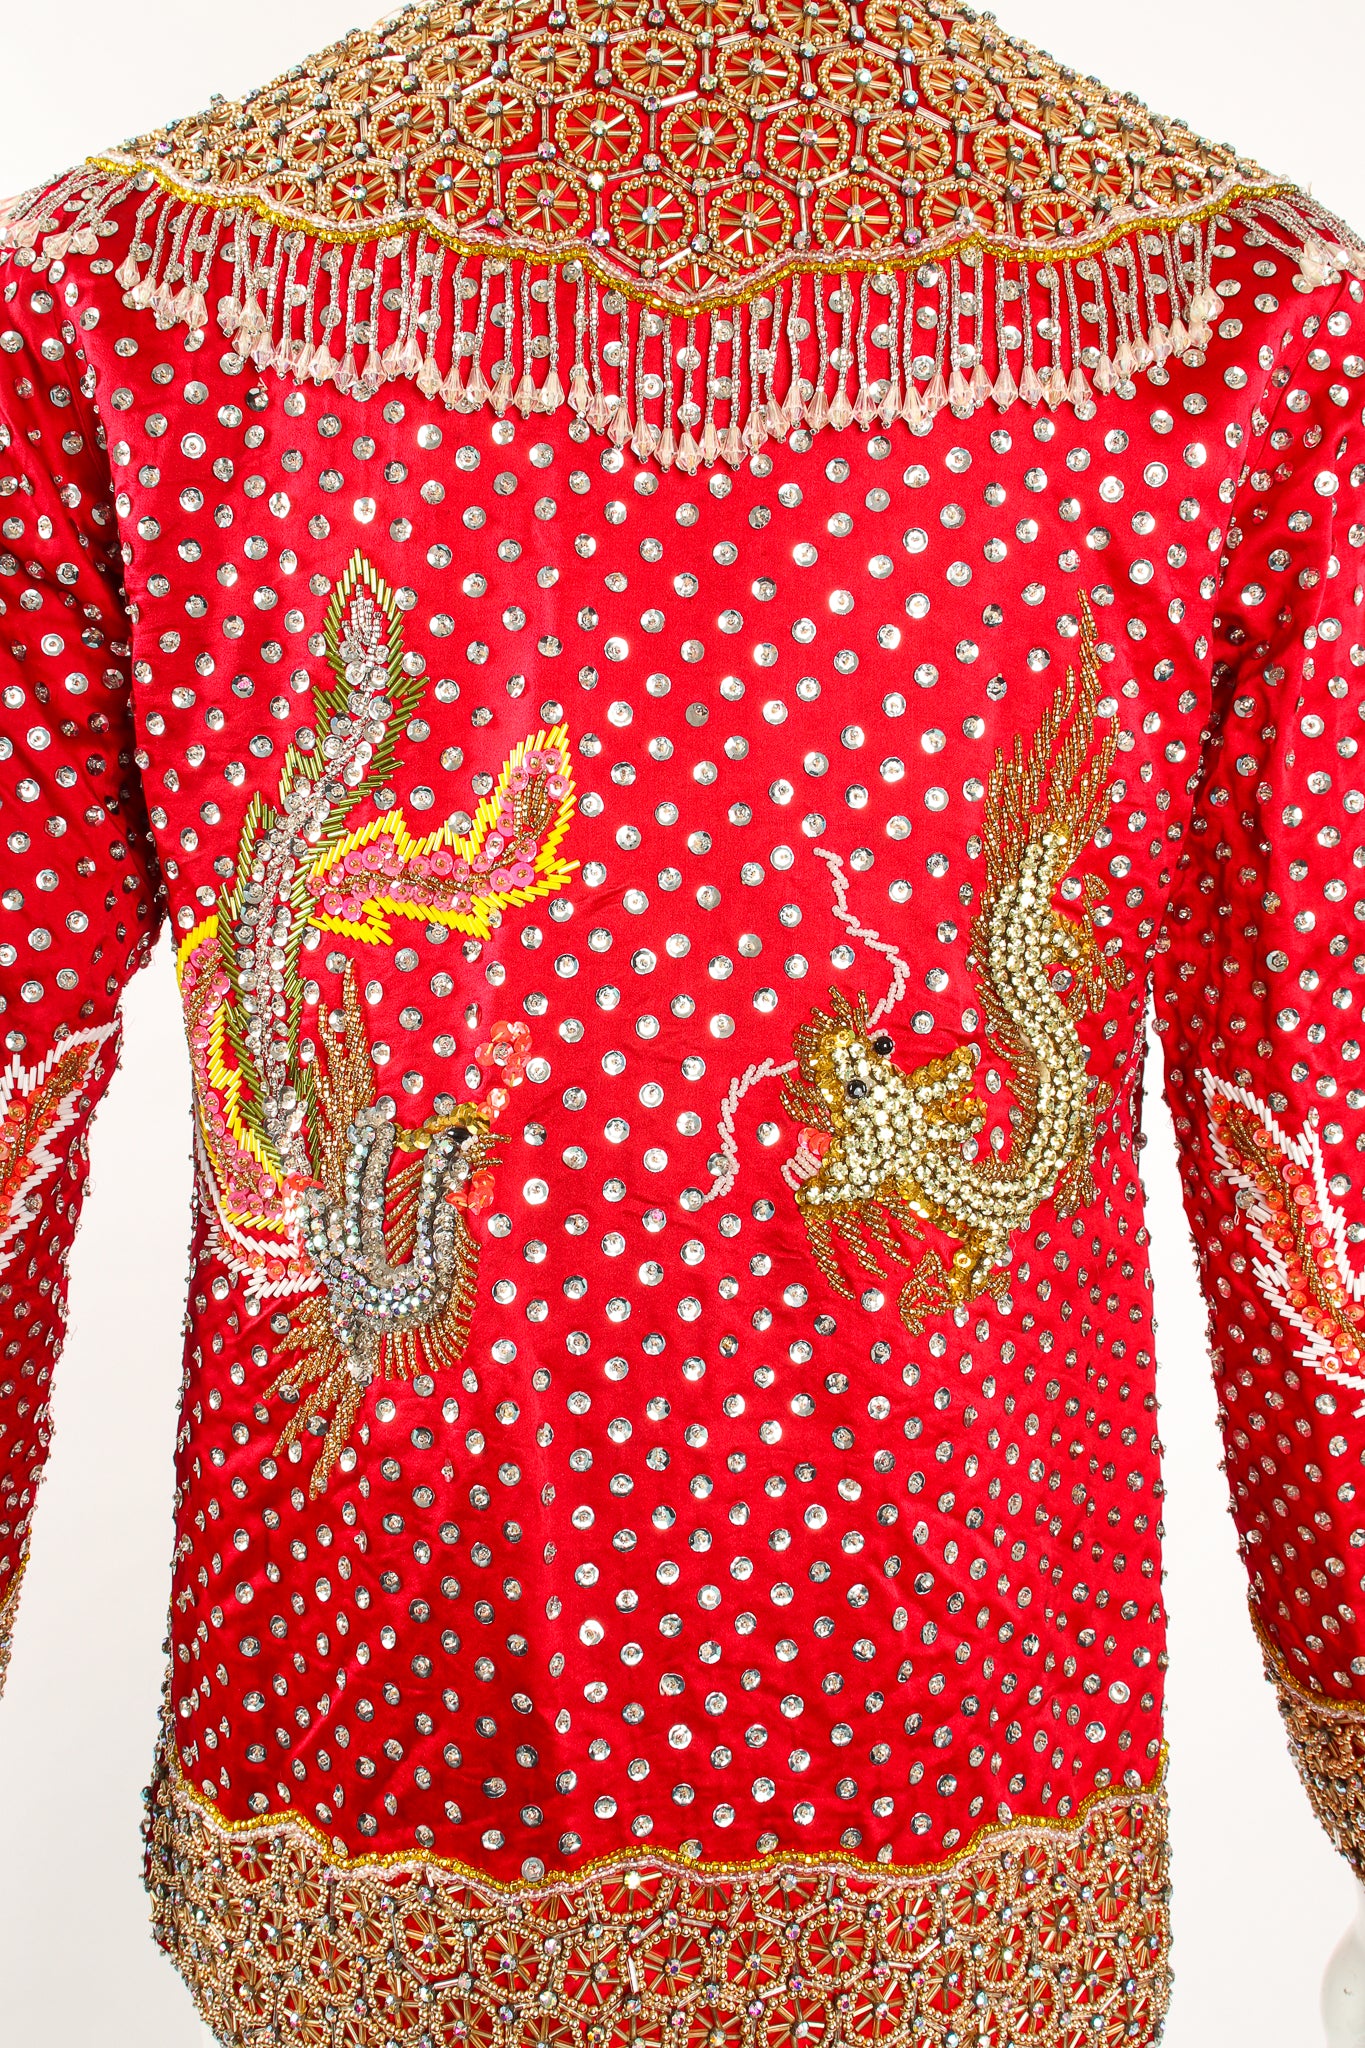 Vintage Embellished Chinese Satin Zip Jacket on Mannequin back crop at Recess Los Angeles